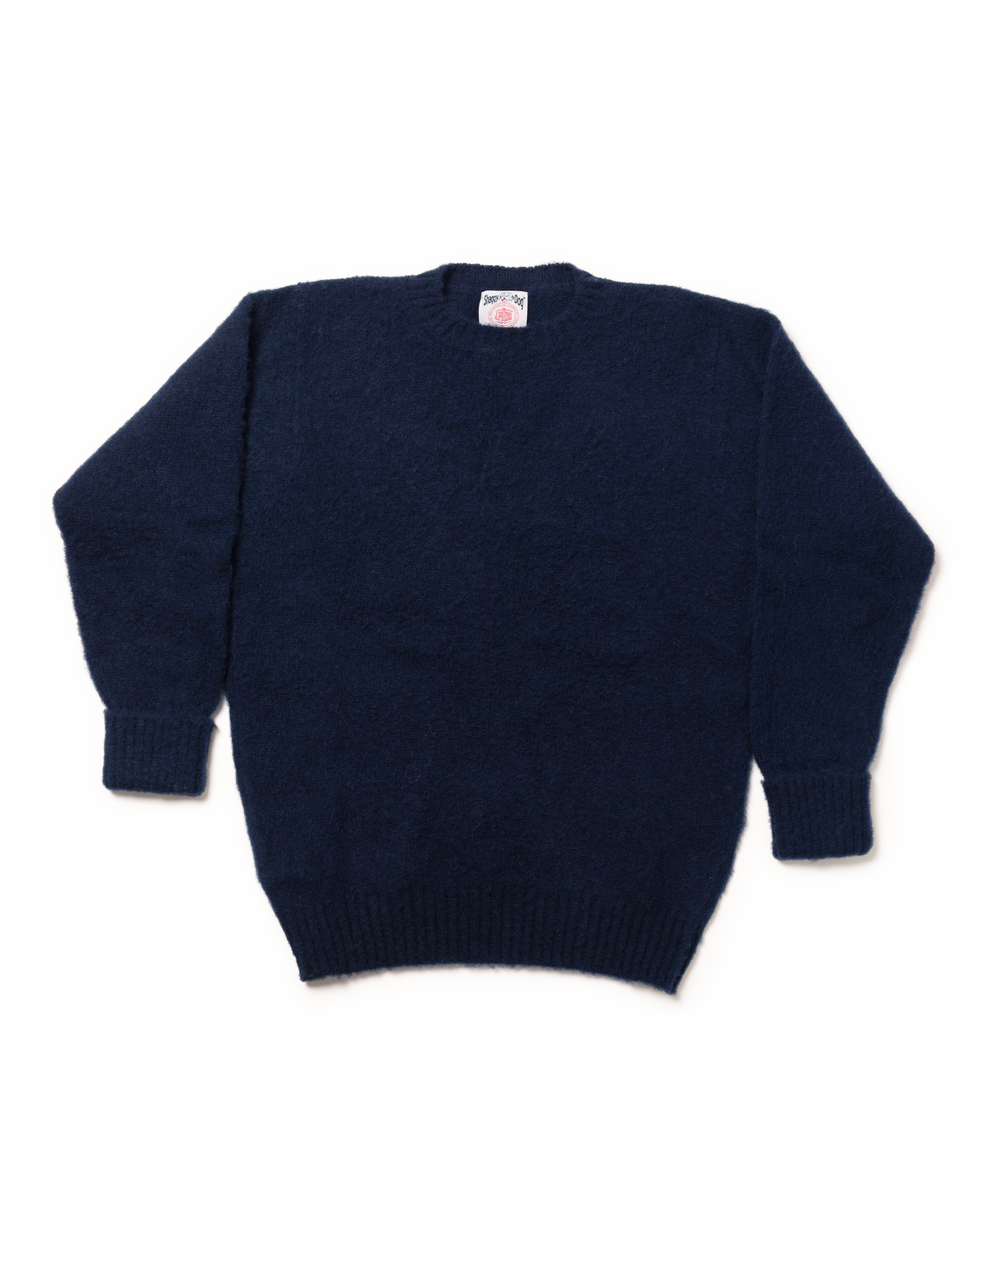 Shaggy Dog Sweater Navy - Classic Fit| Men's Shaggy Dog Sweater – J. PRESS